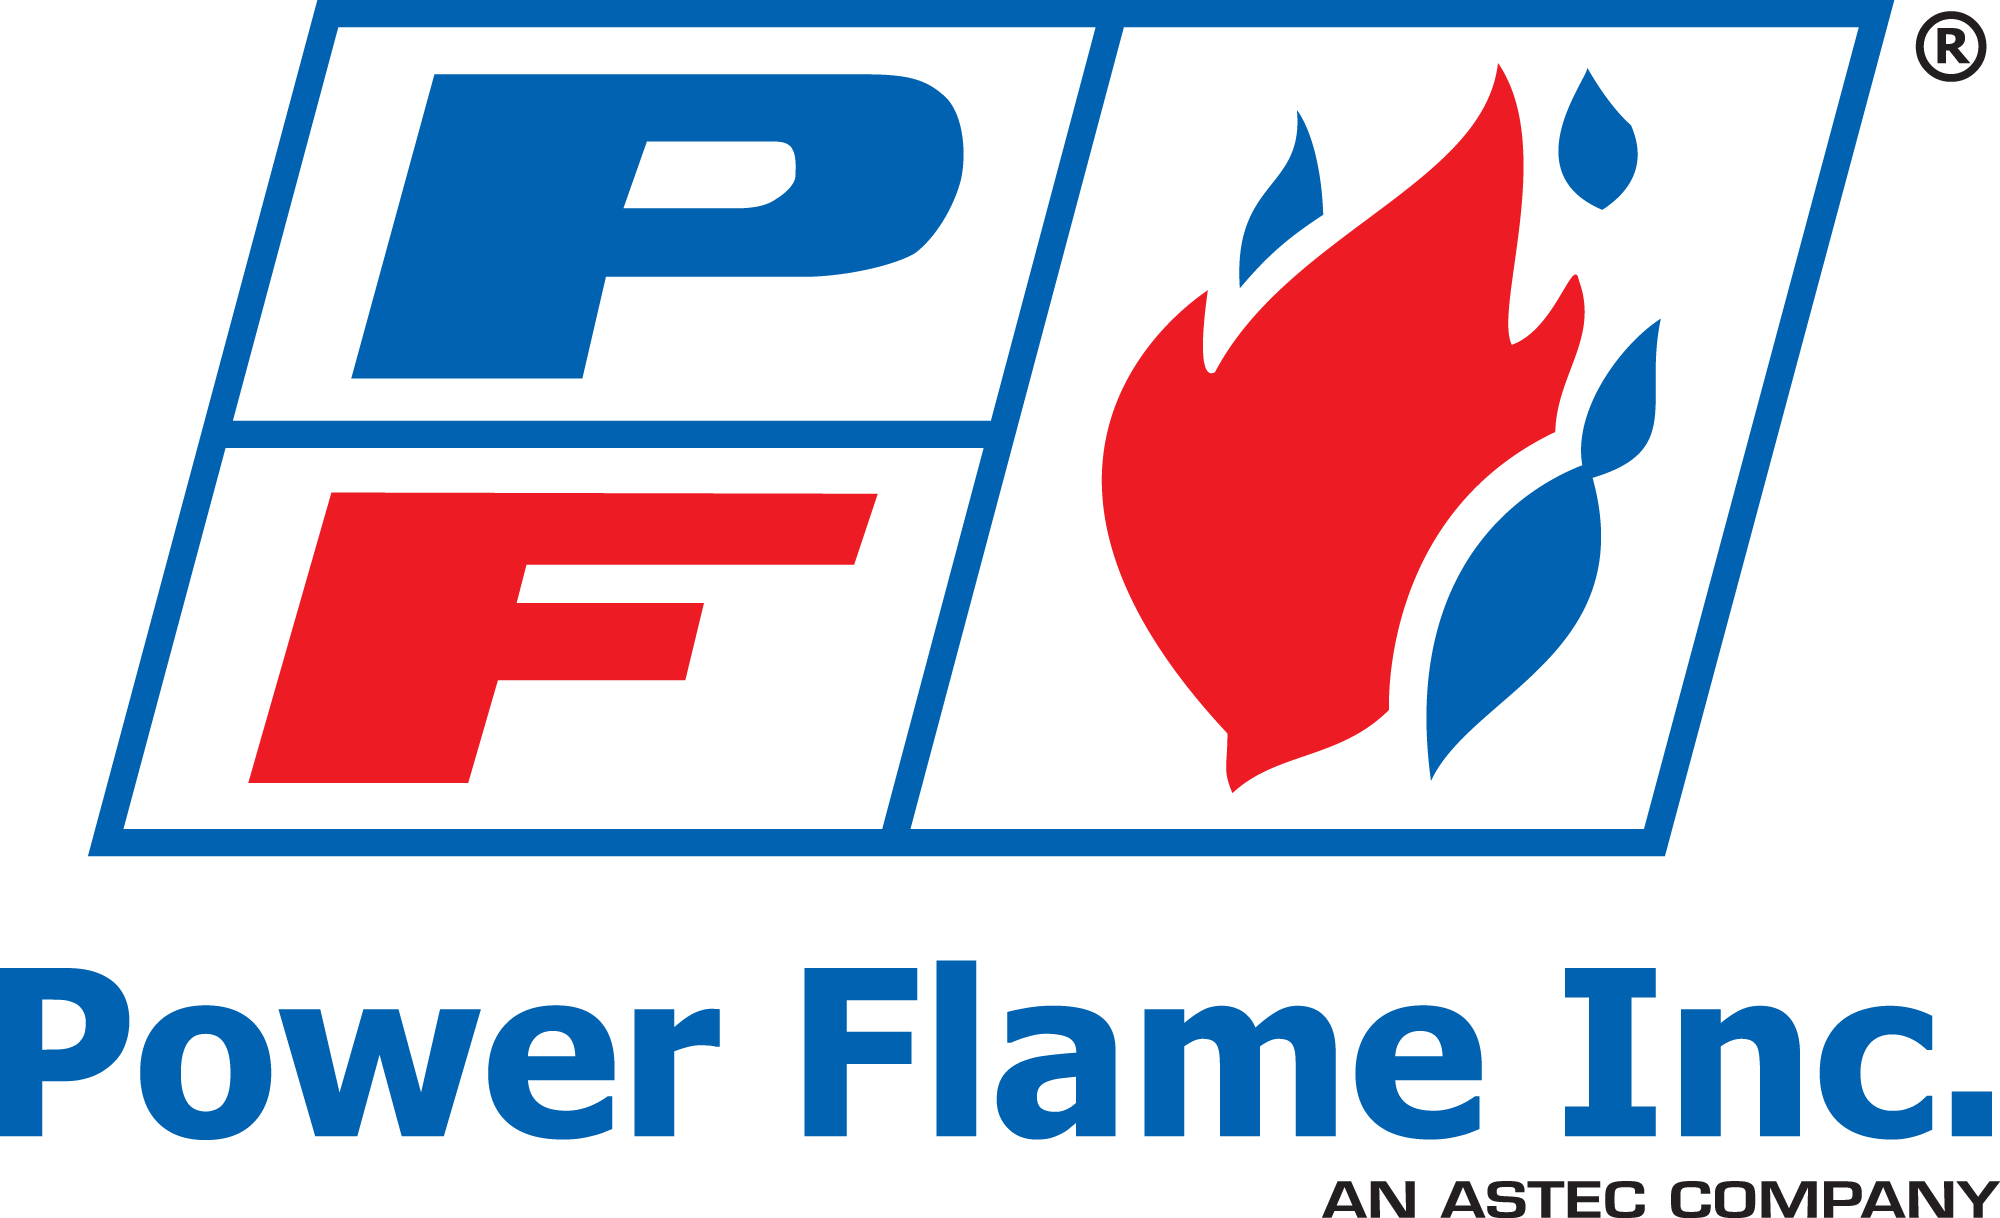 powerflame.com/?utm_source=Engineered+Systems&utm_campaign=TET+Webinar